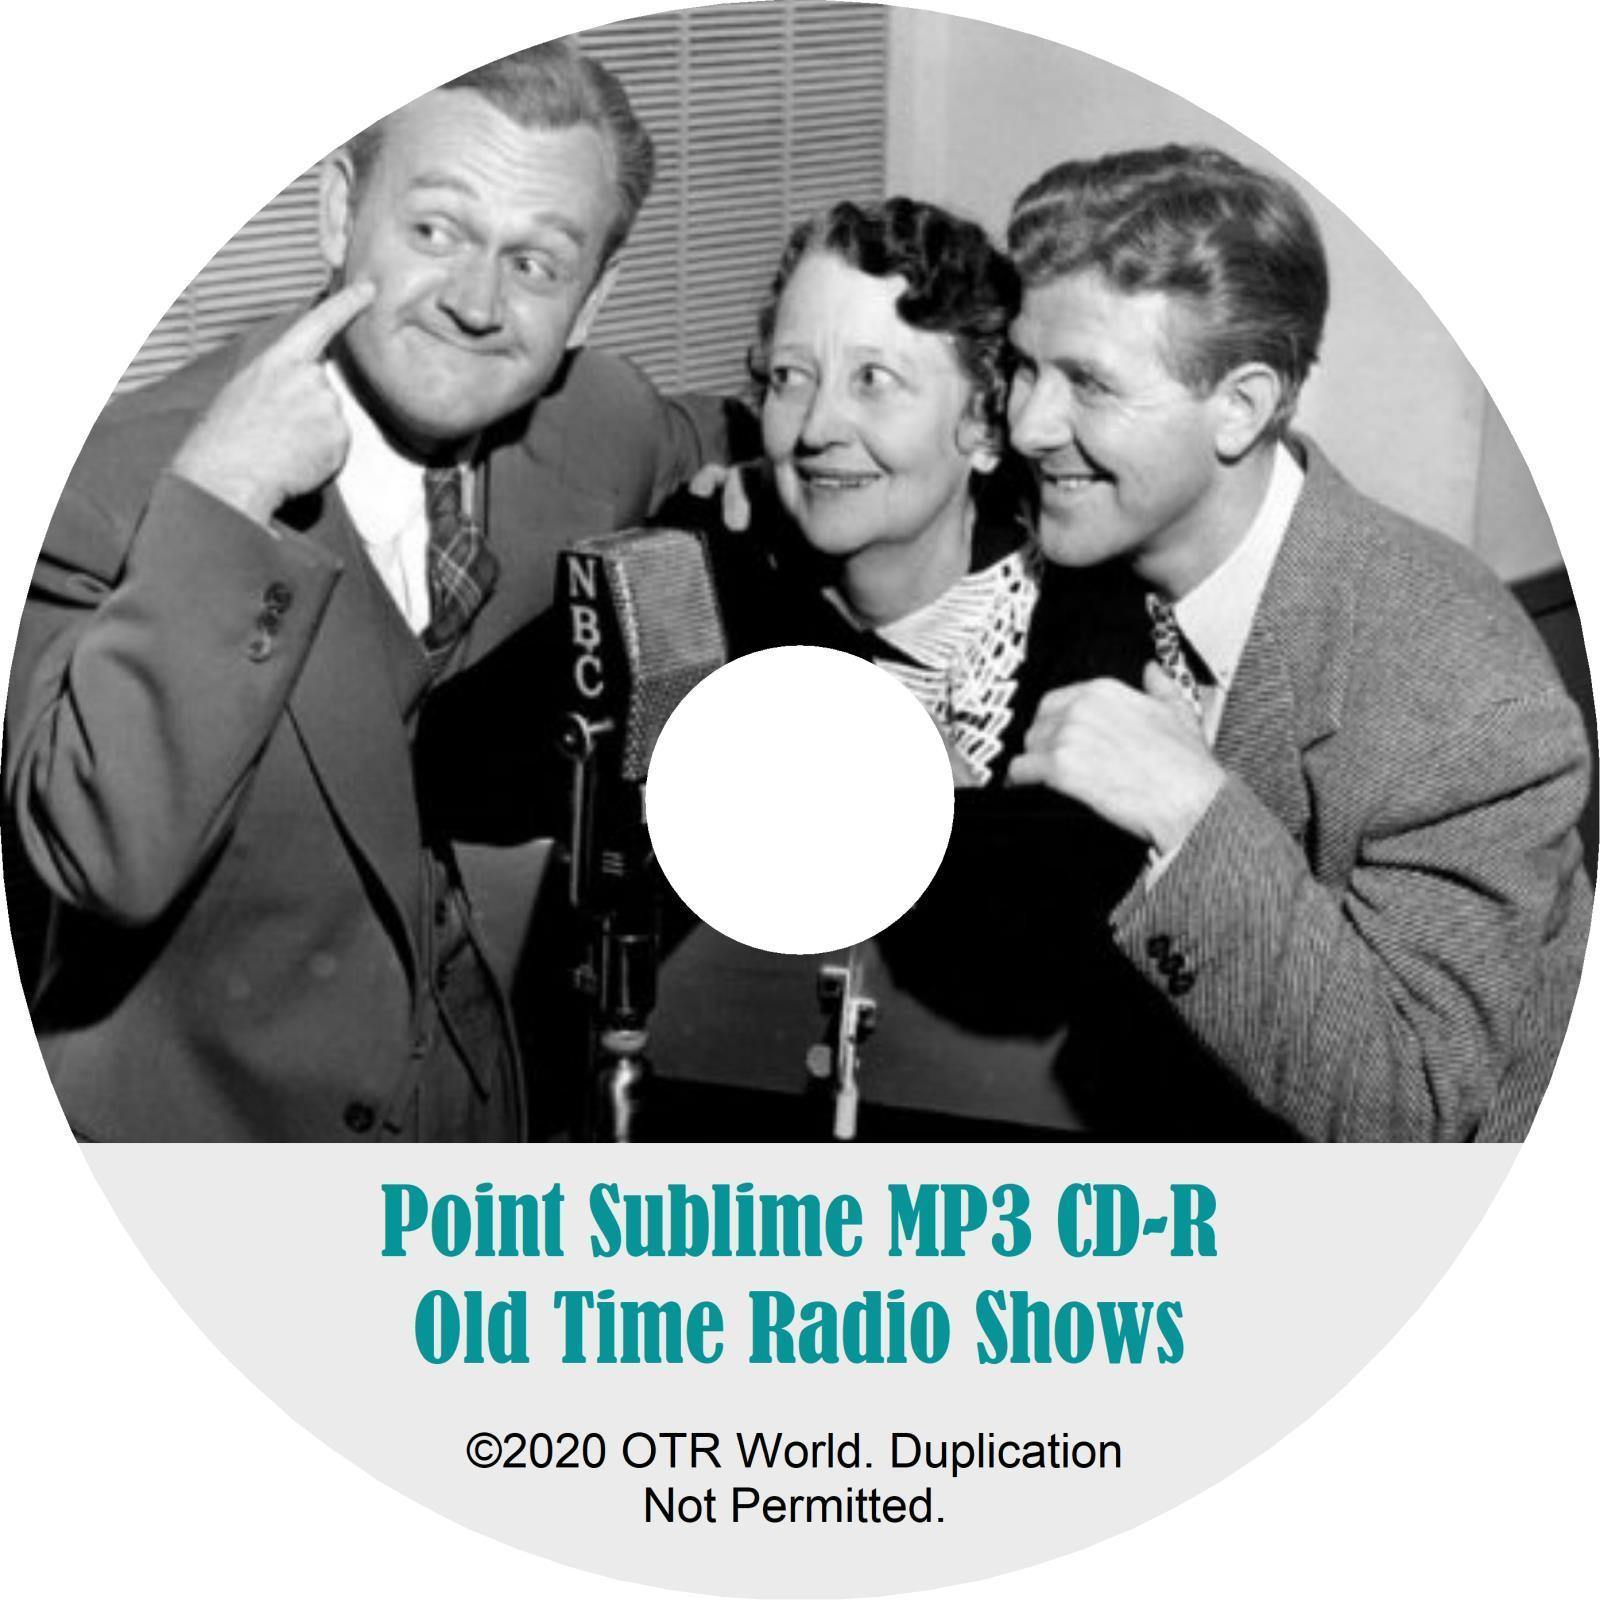 Point Sublime OTR Old Time Radio Shows MP3 On CD 13 Episodes - OTR World